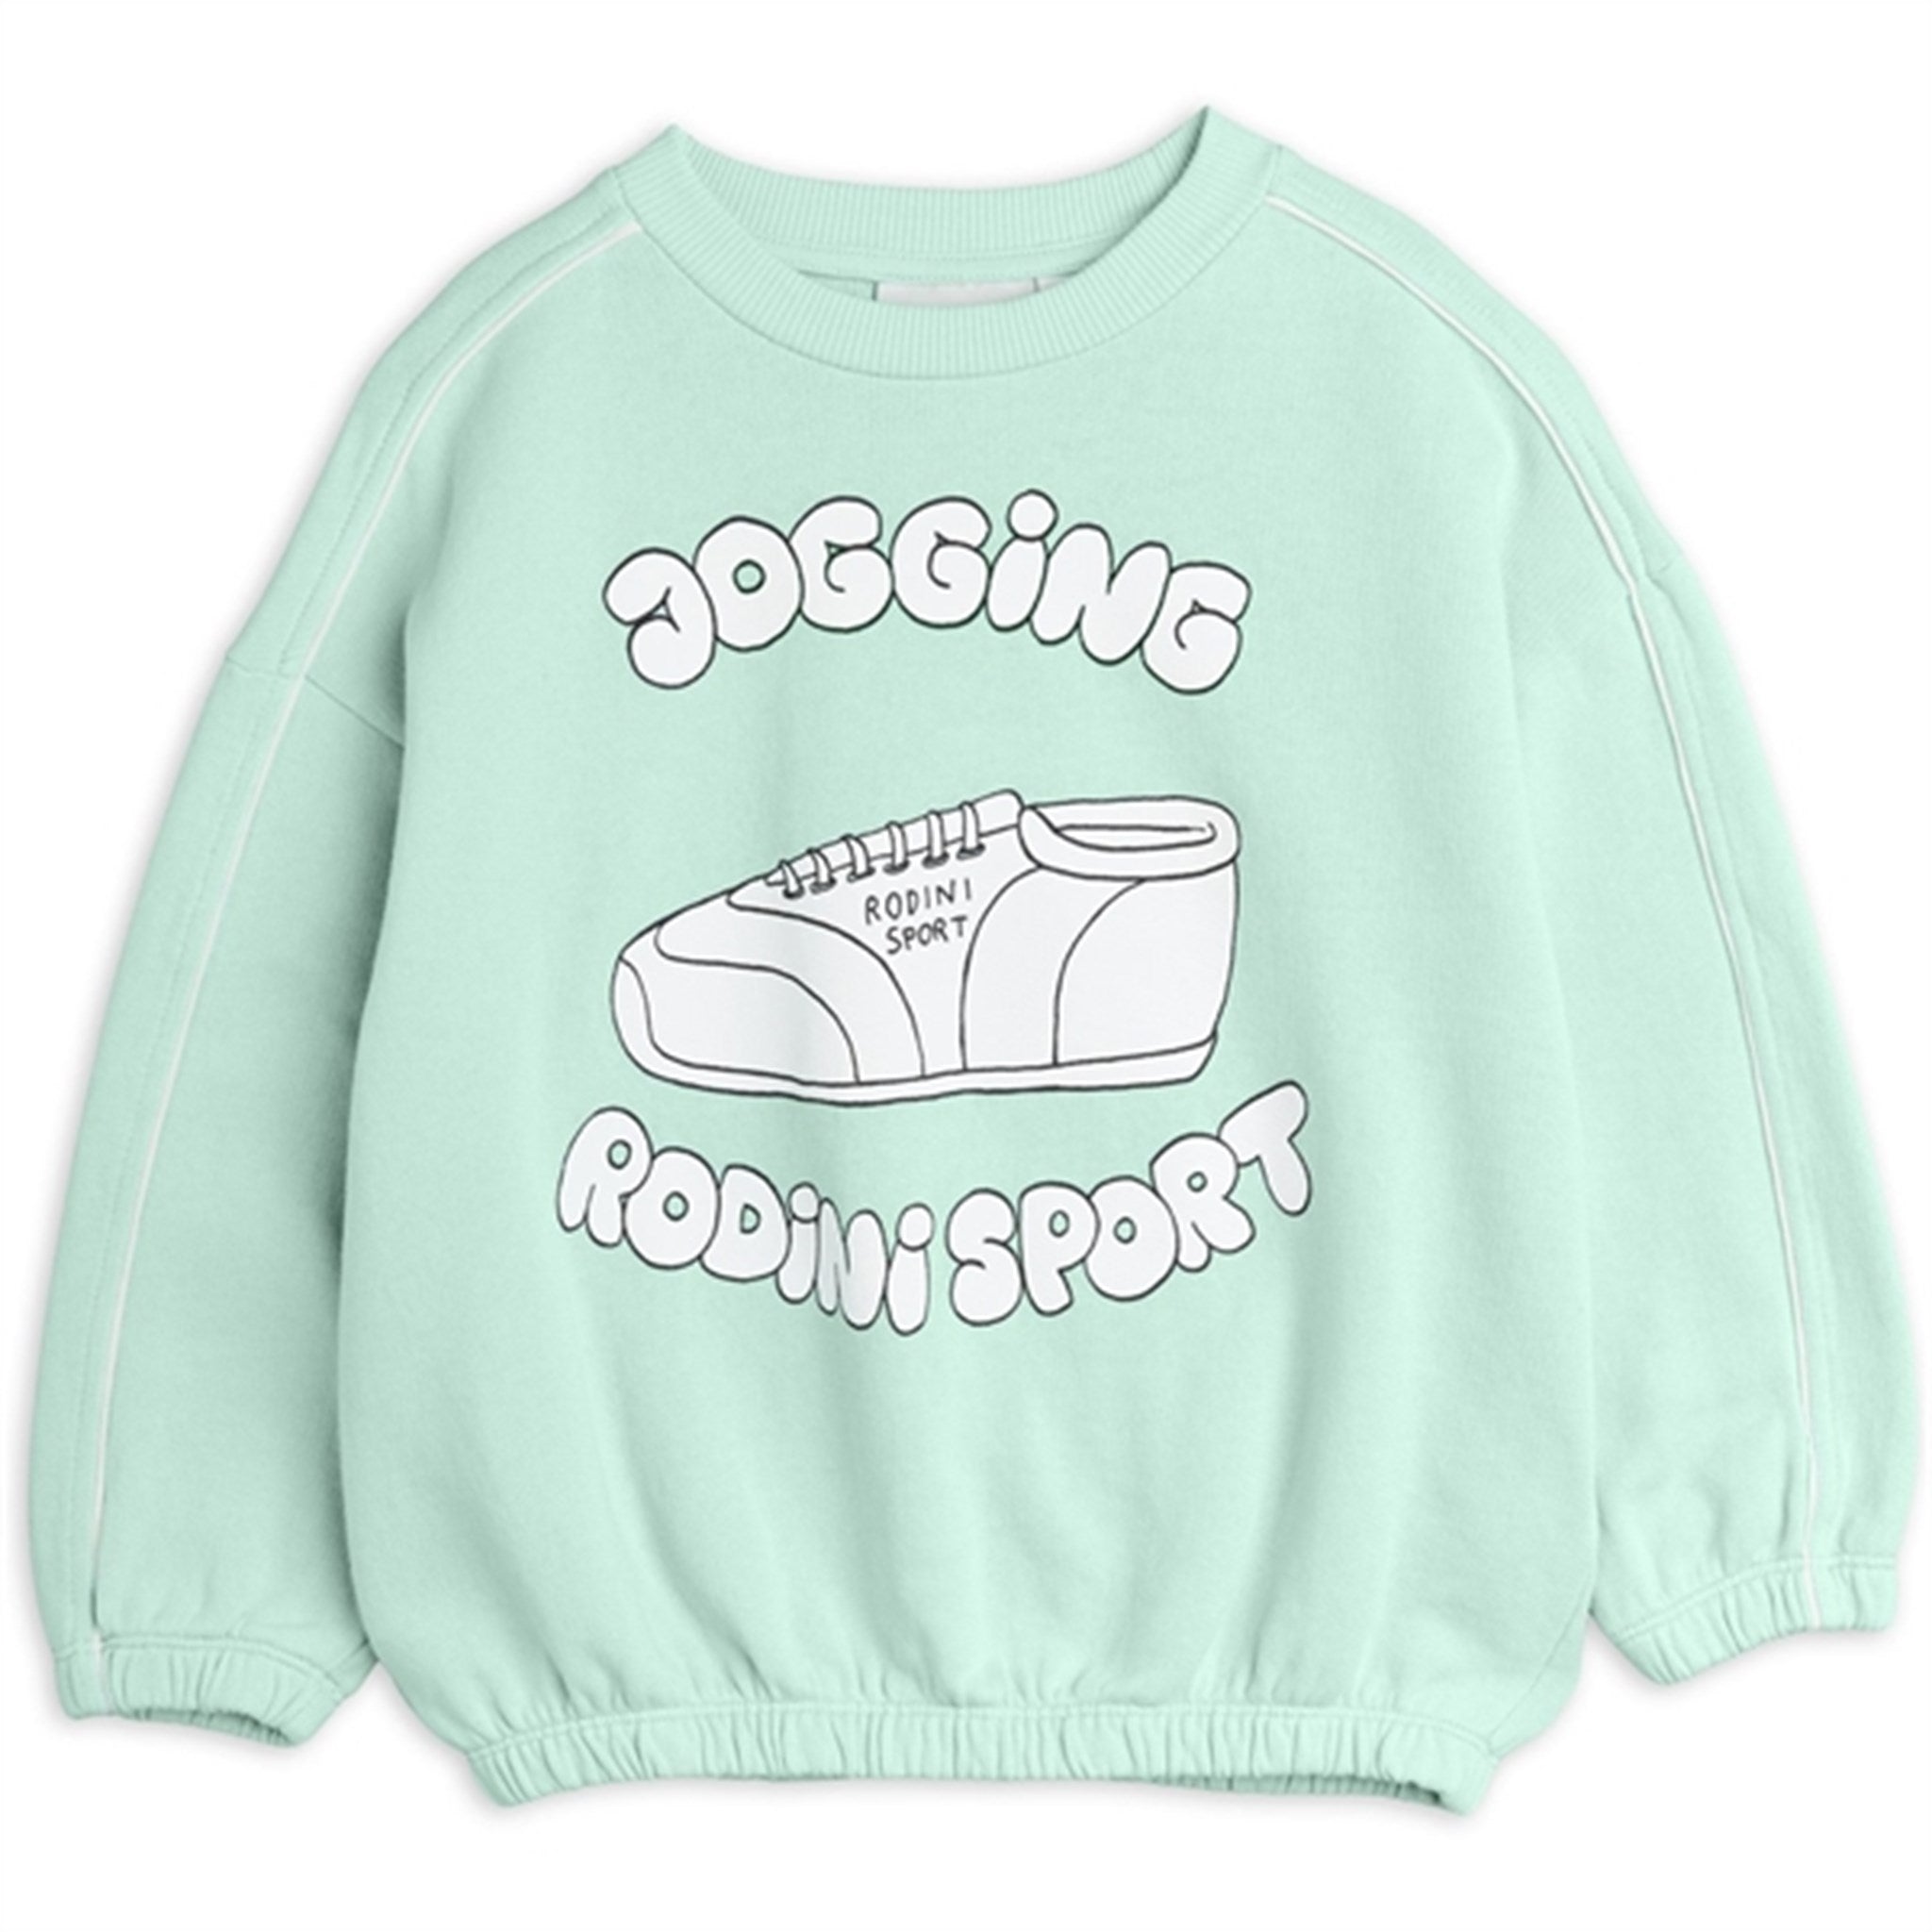 Mini Rodini Green Jogging Sp Sweatshirt